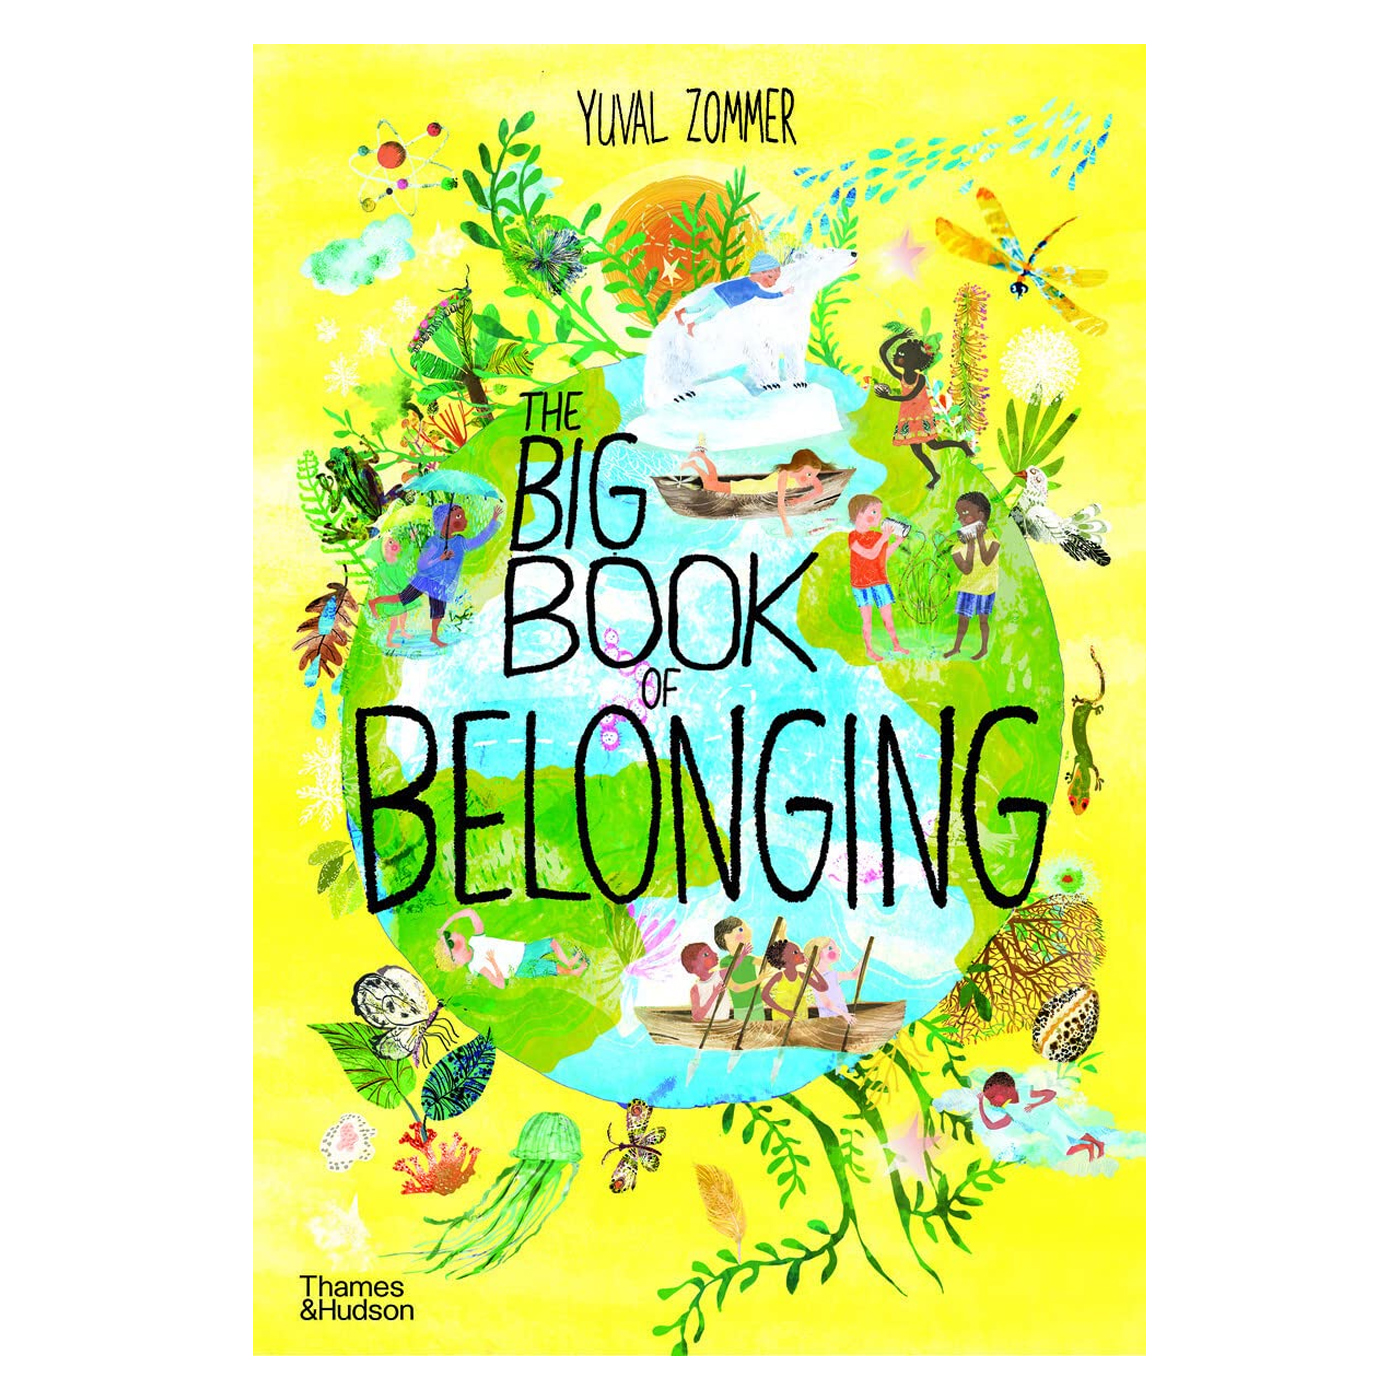  The Big Book of Belonging